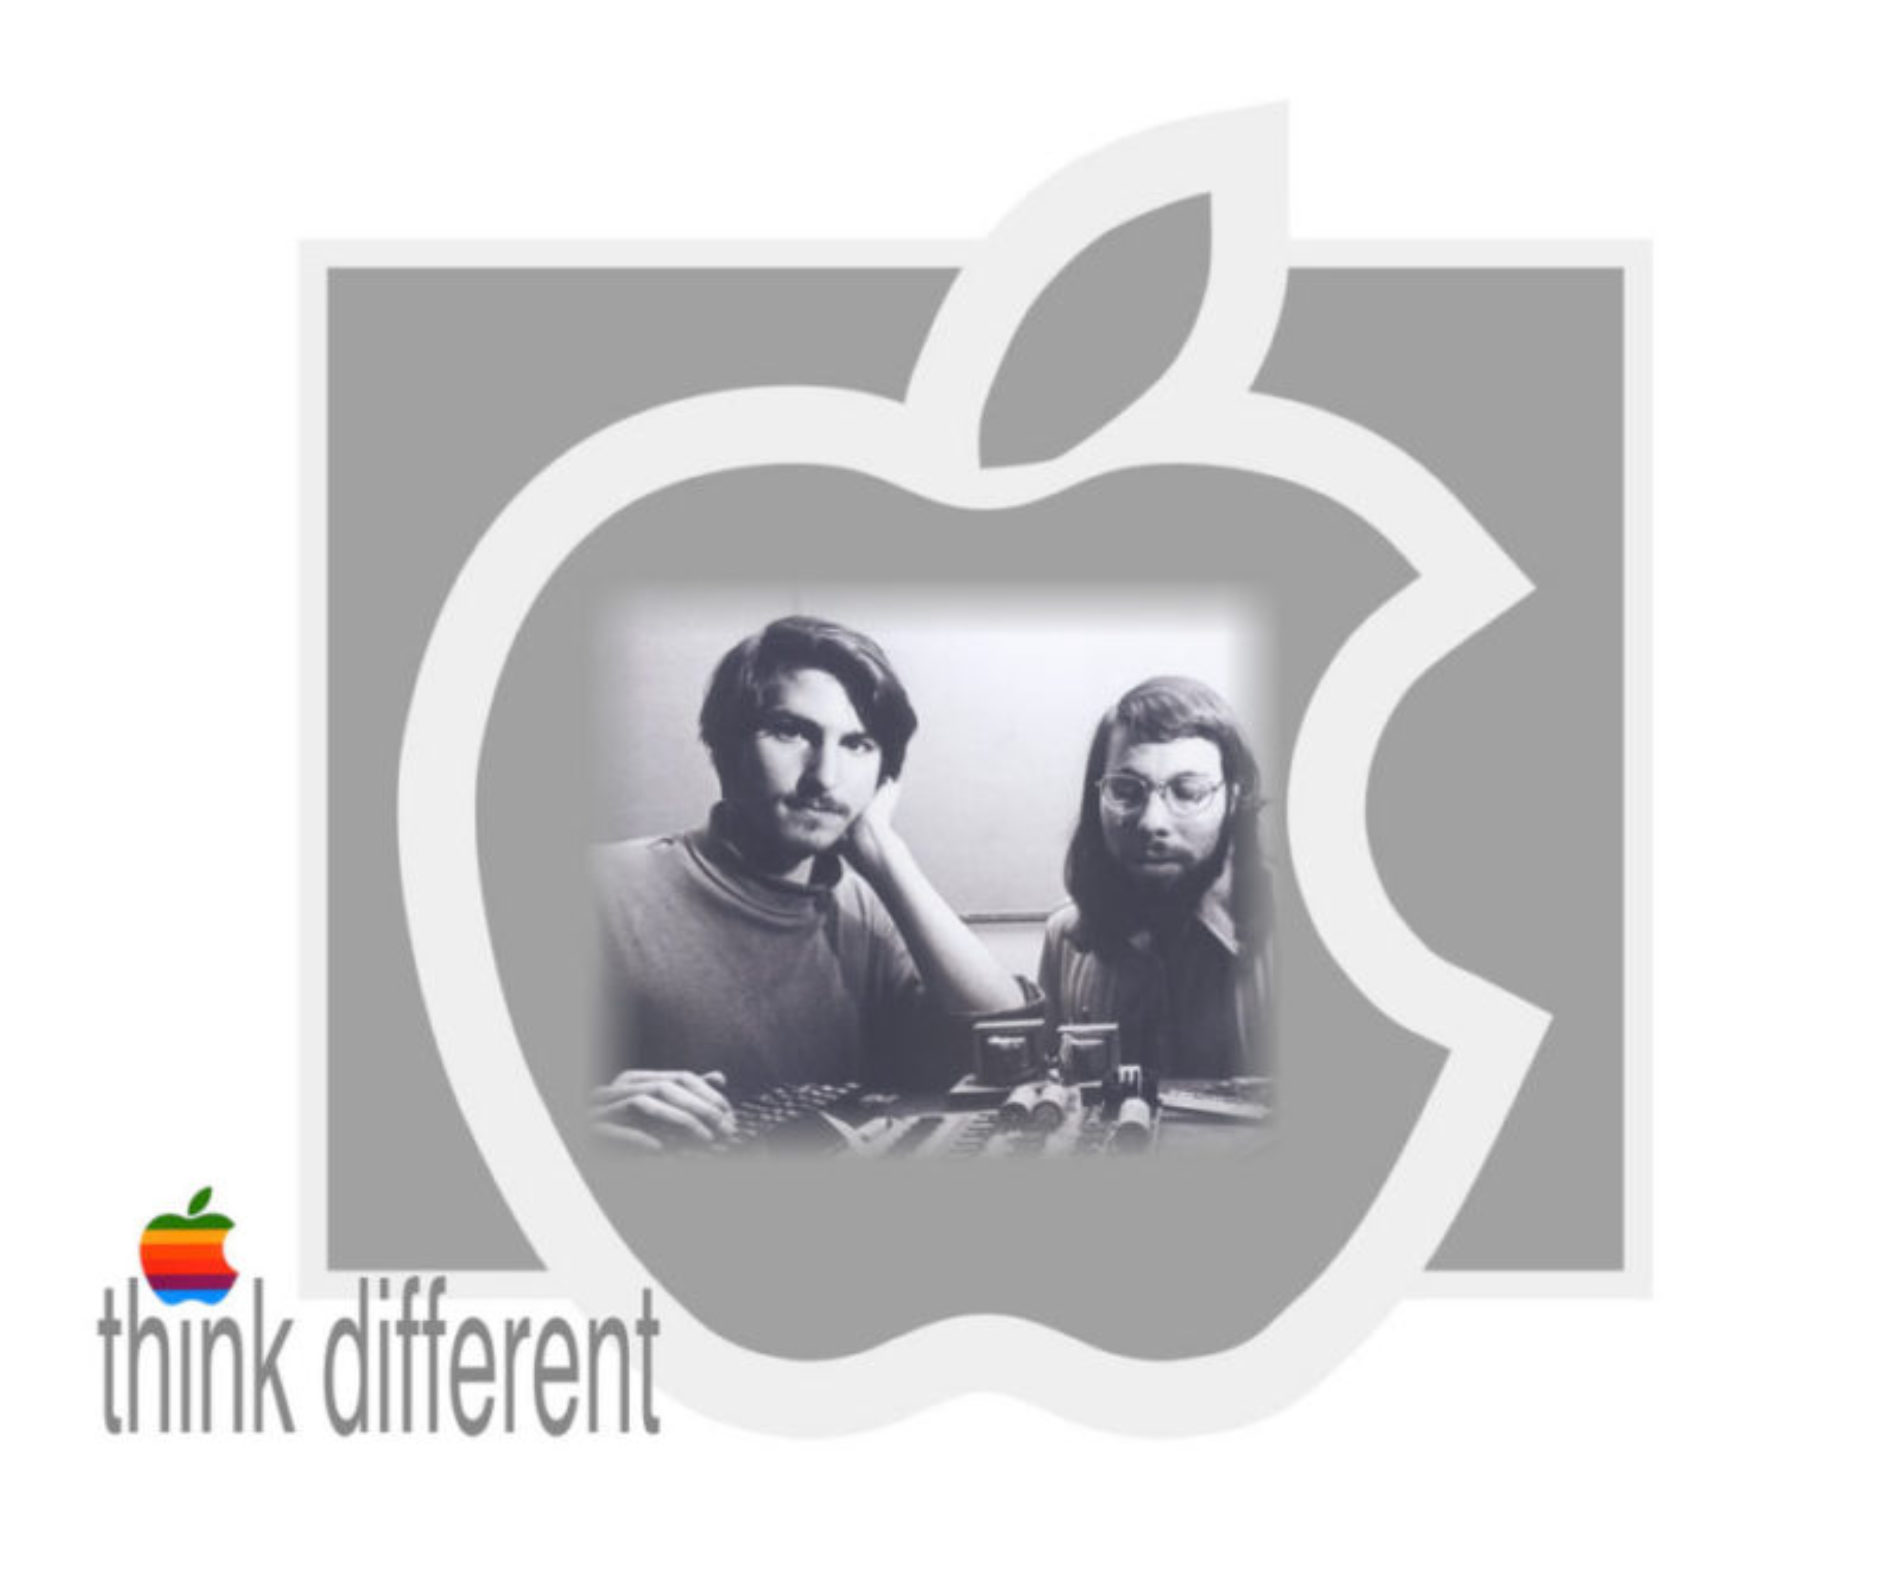 1 de Abril de 1976 Steve Jobs, Steve Wozniak  fundan Apple